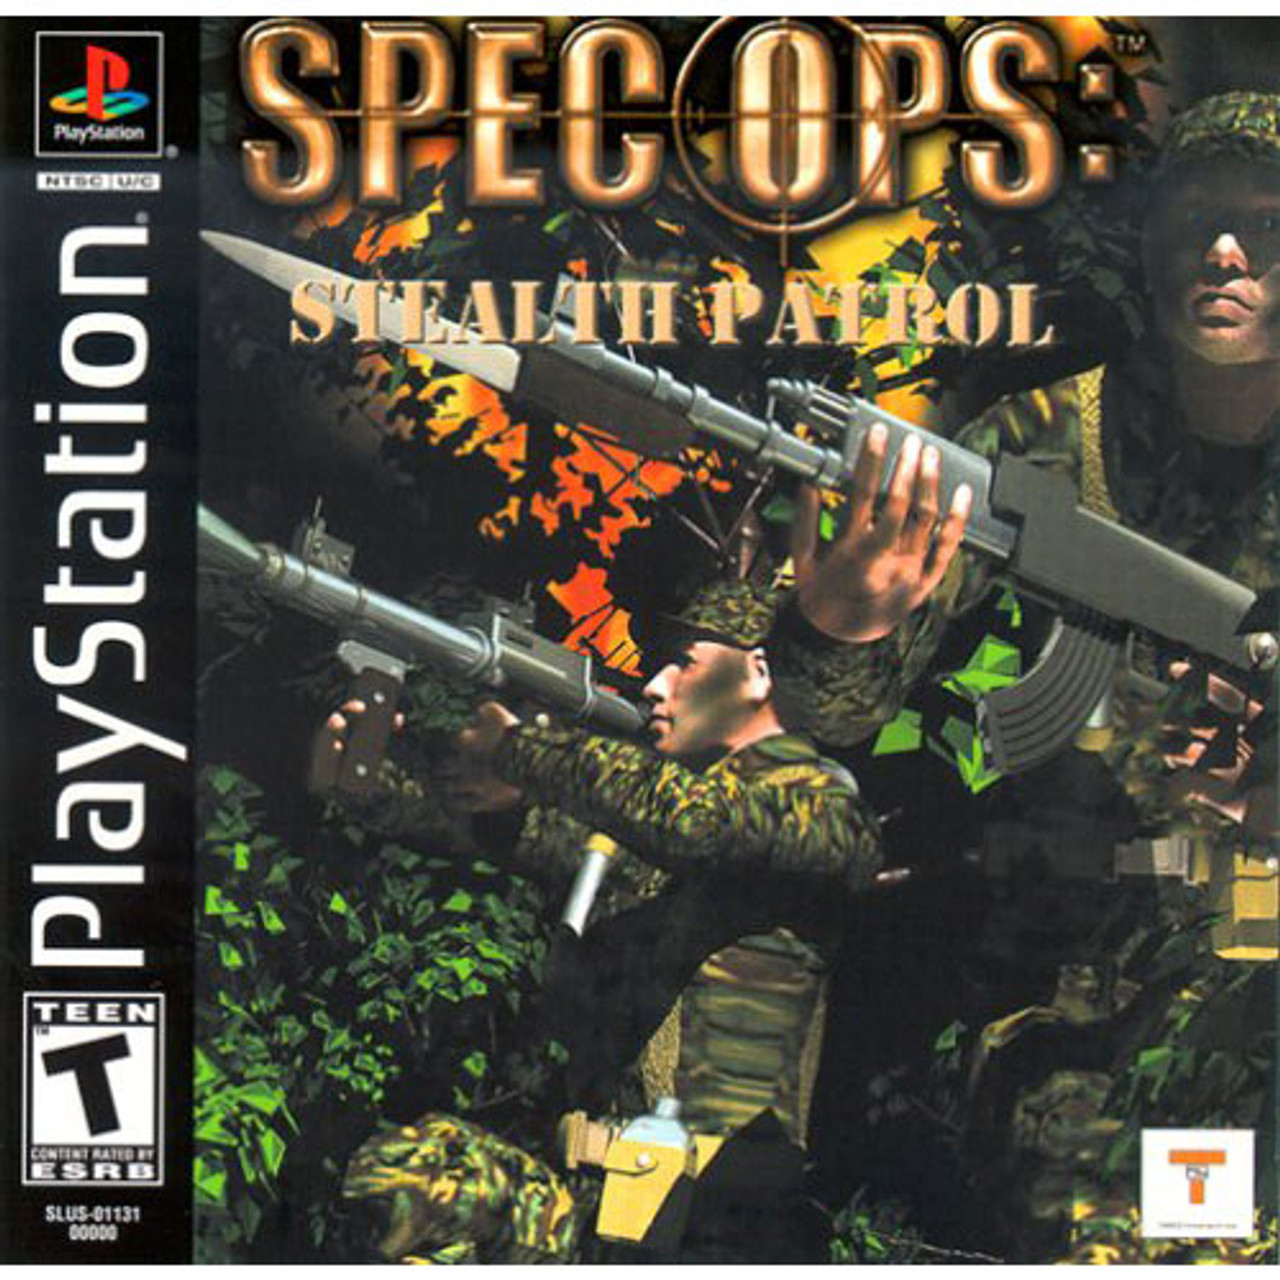 Spec OpsStealth Patrol Playstation 1 PS1 Game For Sale DKOldies